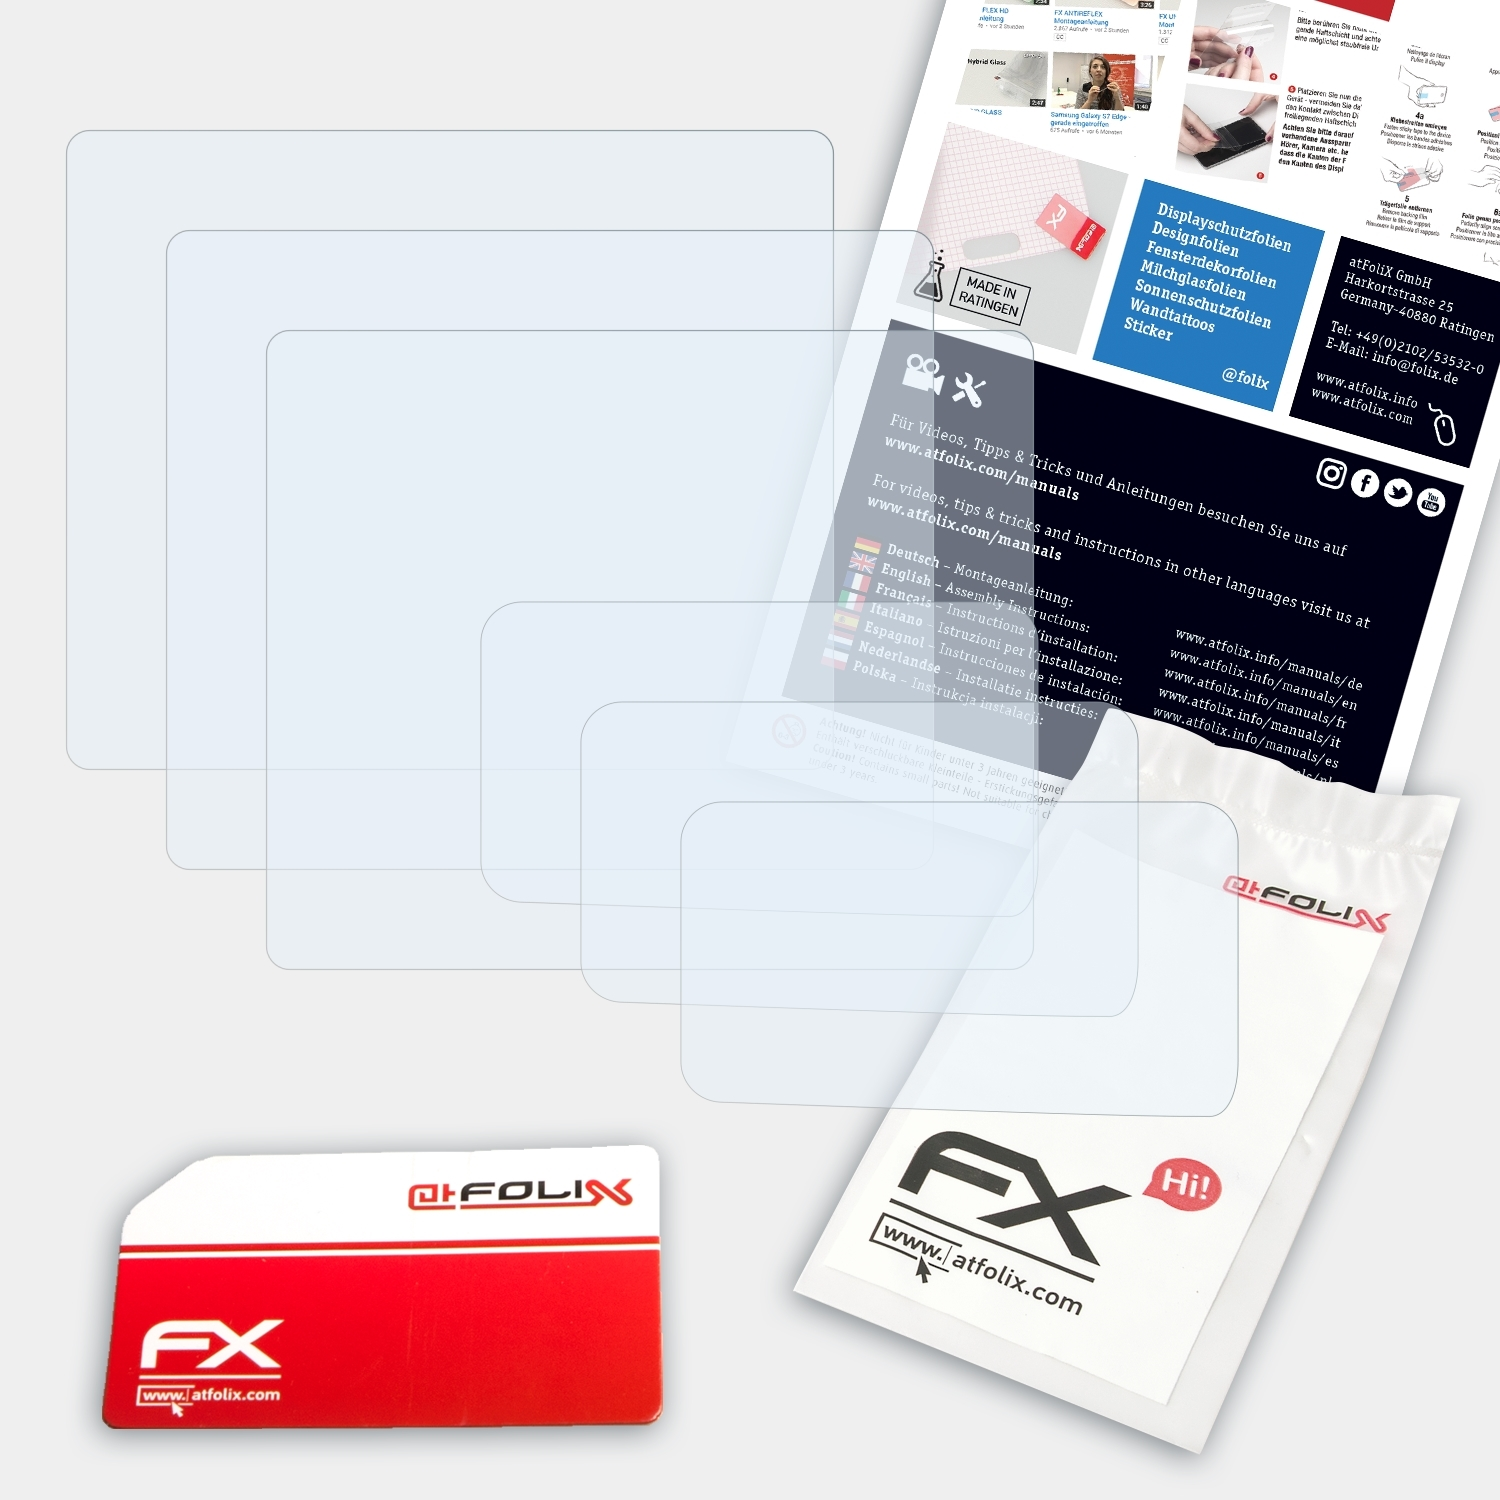 ATFOLIX 3x K10D) Displayschutz(für Pentax FX-Clear